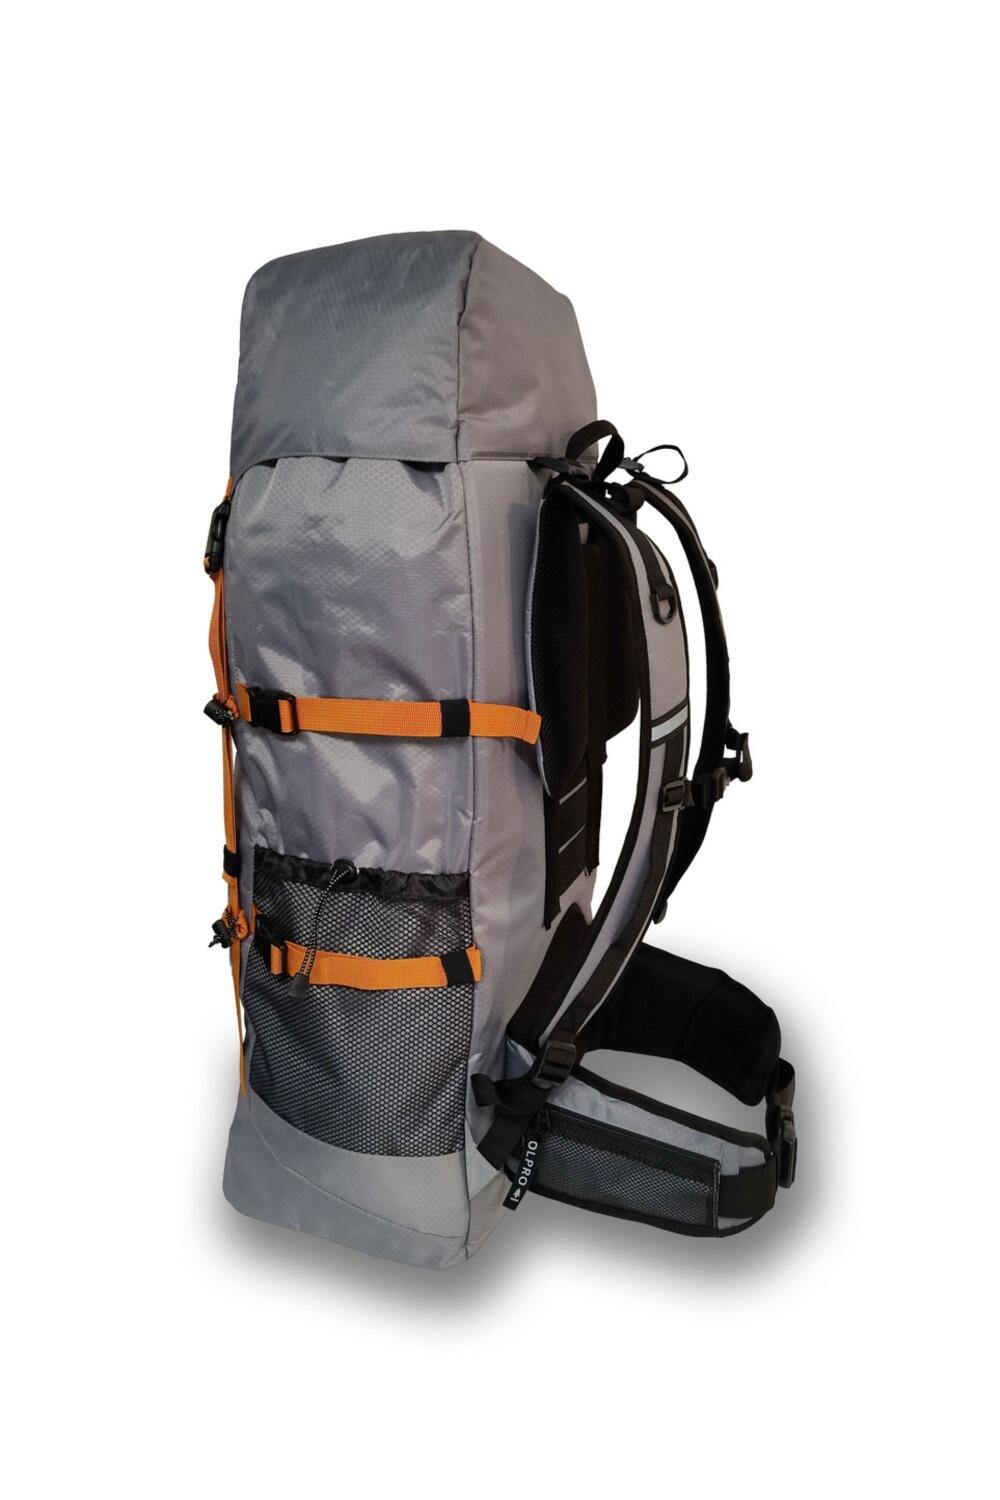 OLPRO 80L Rucksack Bag Grey 4/4